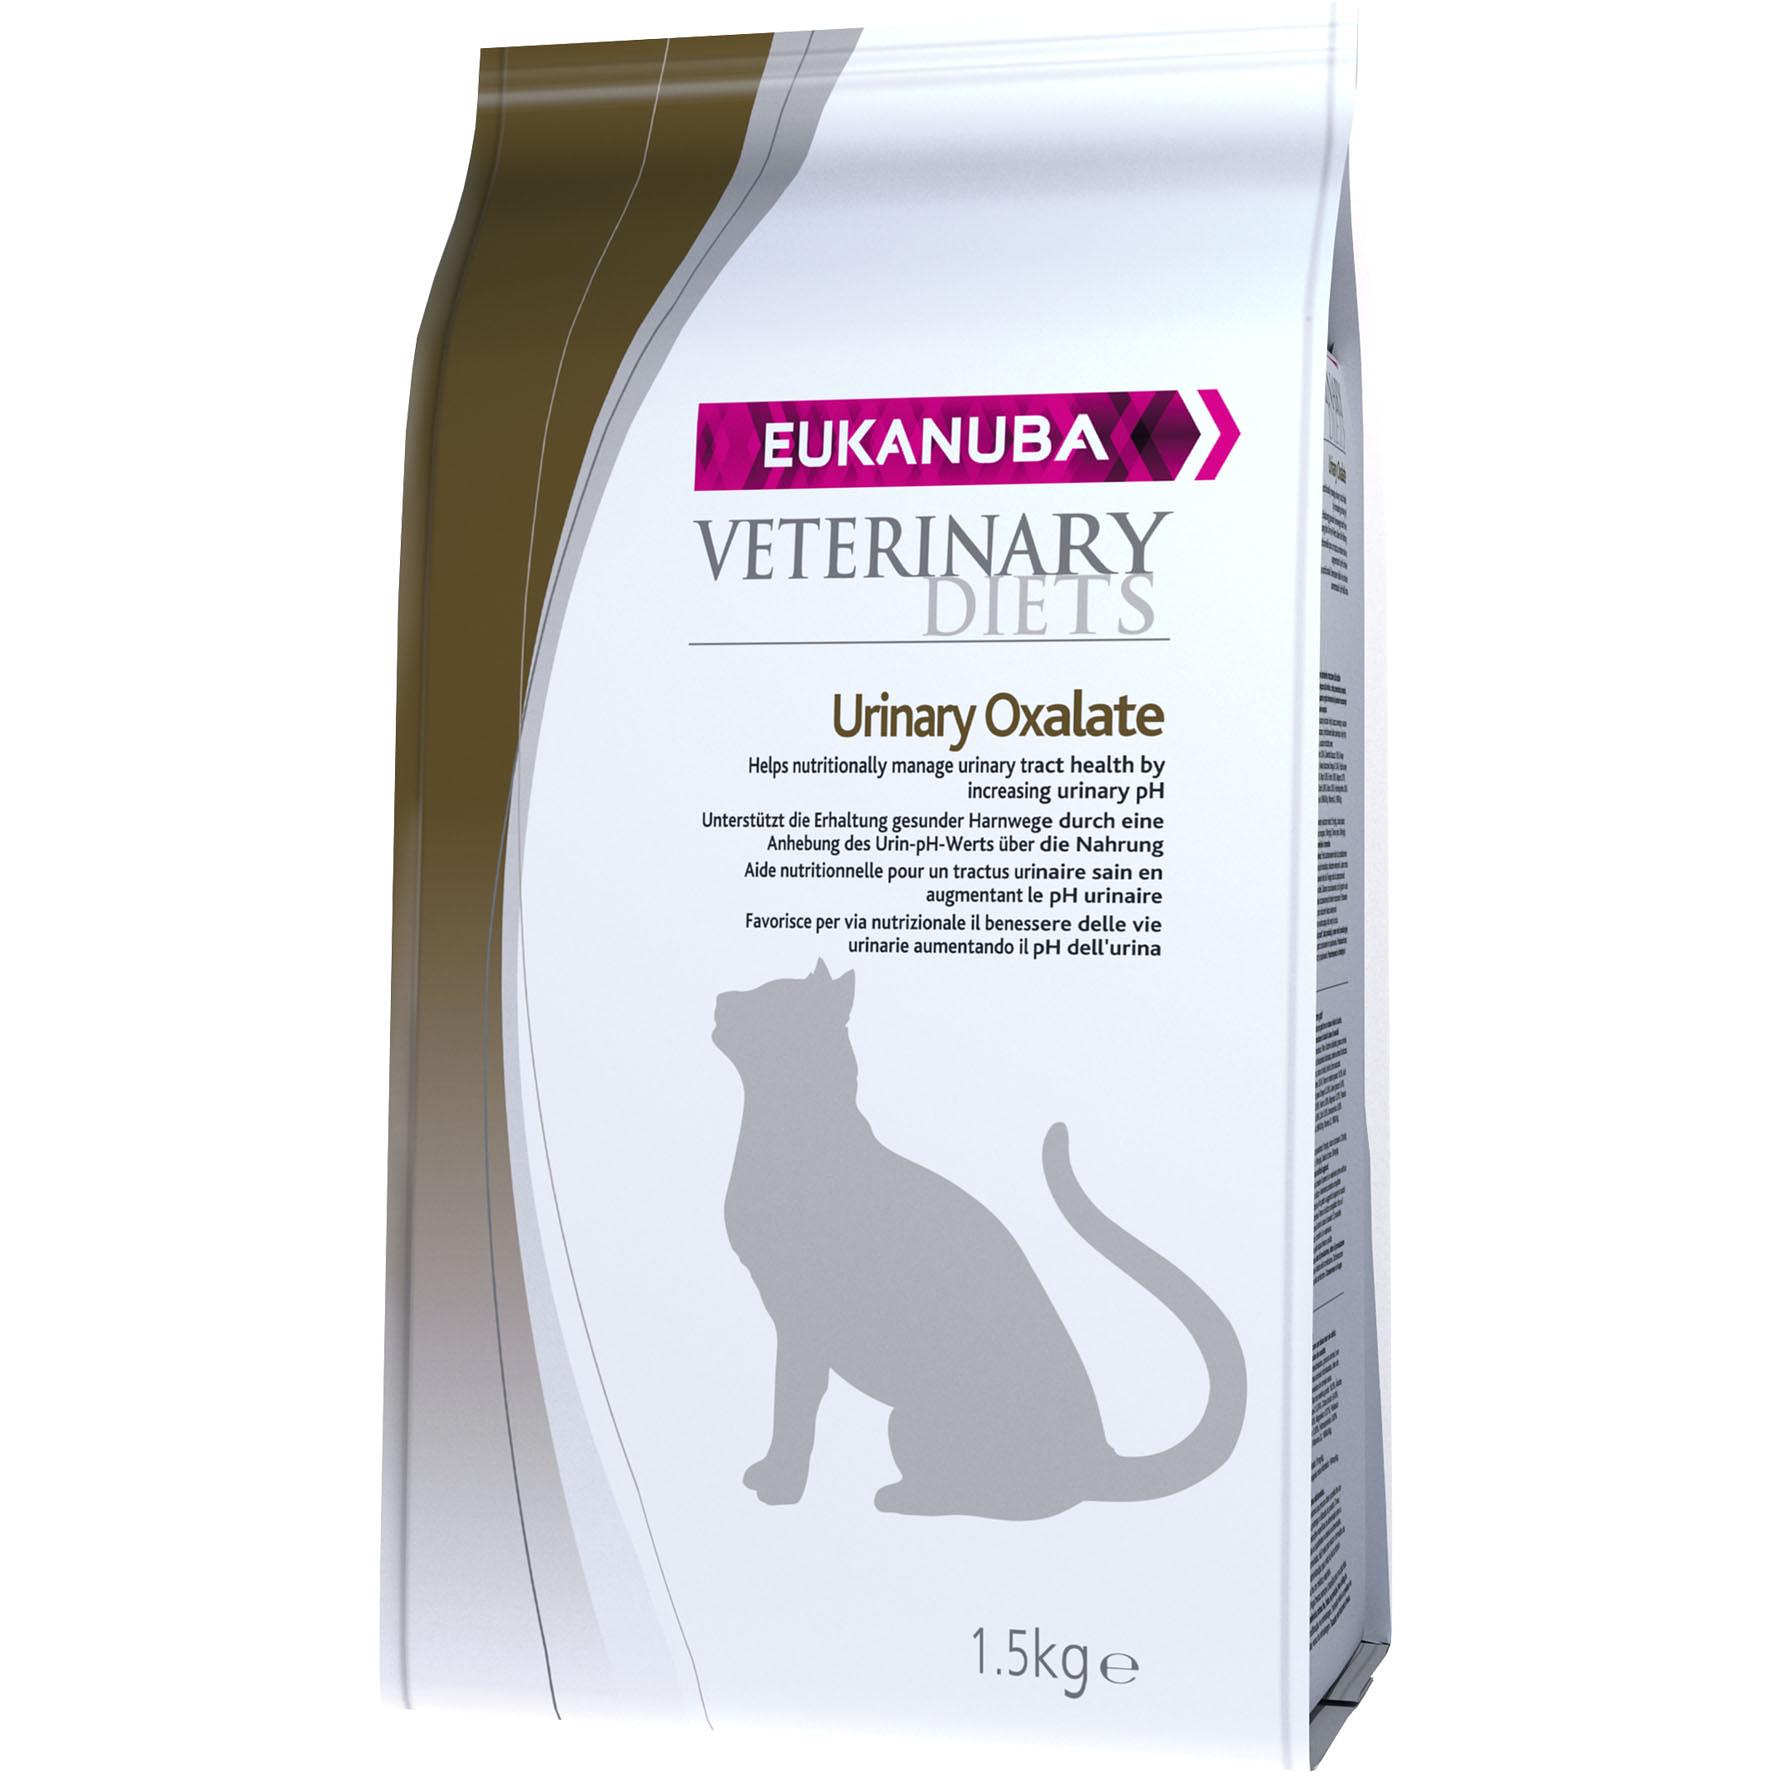 Eukanuba Veterinary Diet Urinary Oxalate